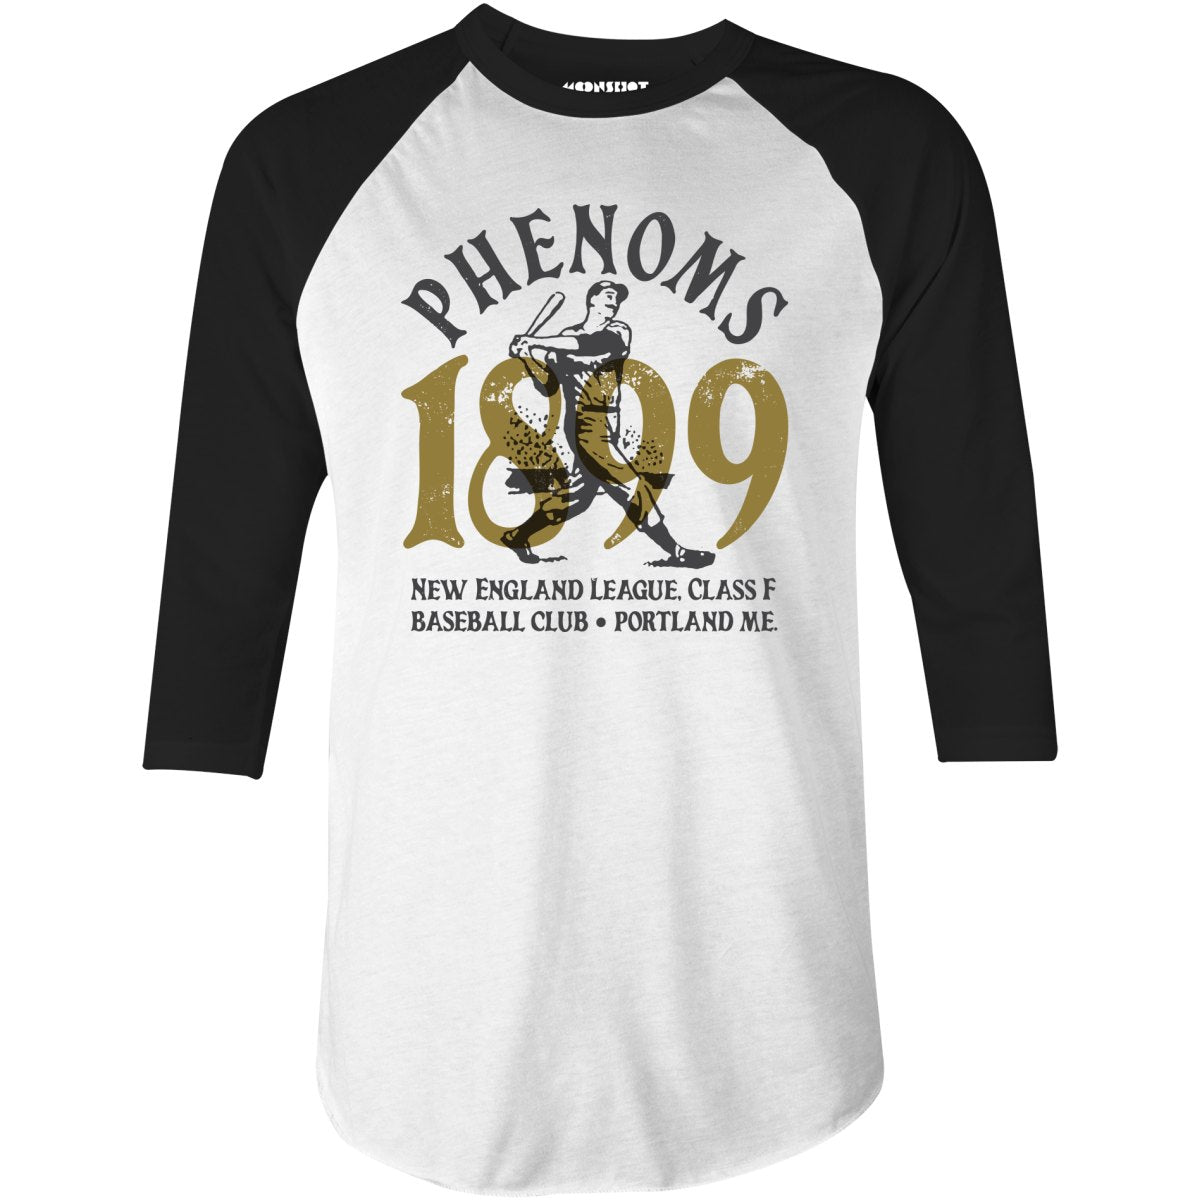 Portland Phenoms - Maine - Vintage Defunct Baseball Teams - 3/4 Sleeve Raglan T-Shirt